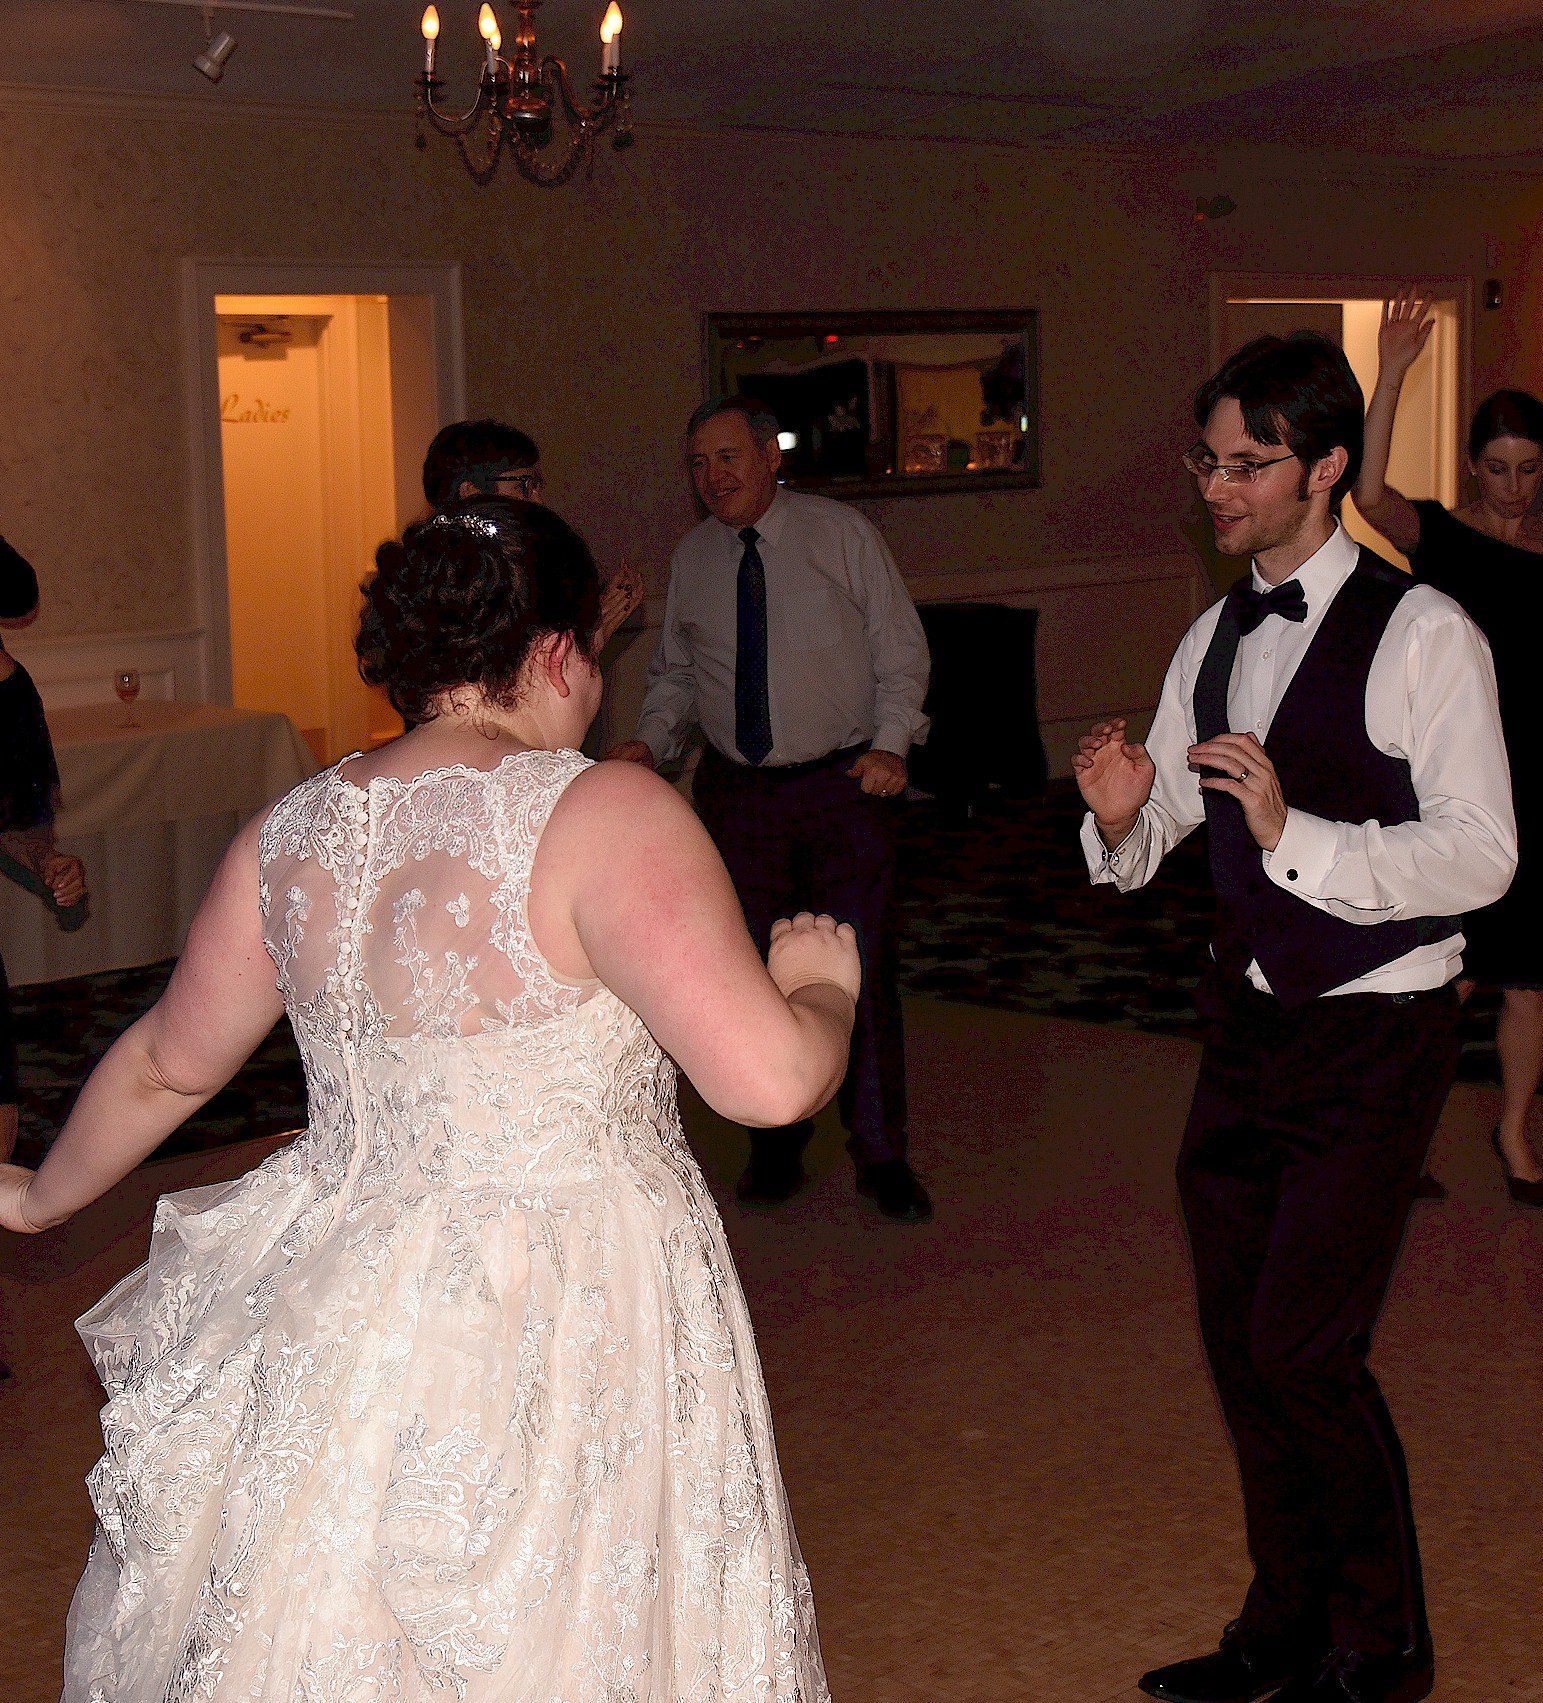 wedding guests dancing at The Essex Room, Essex, Massachusetts